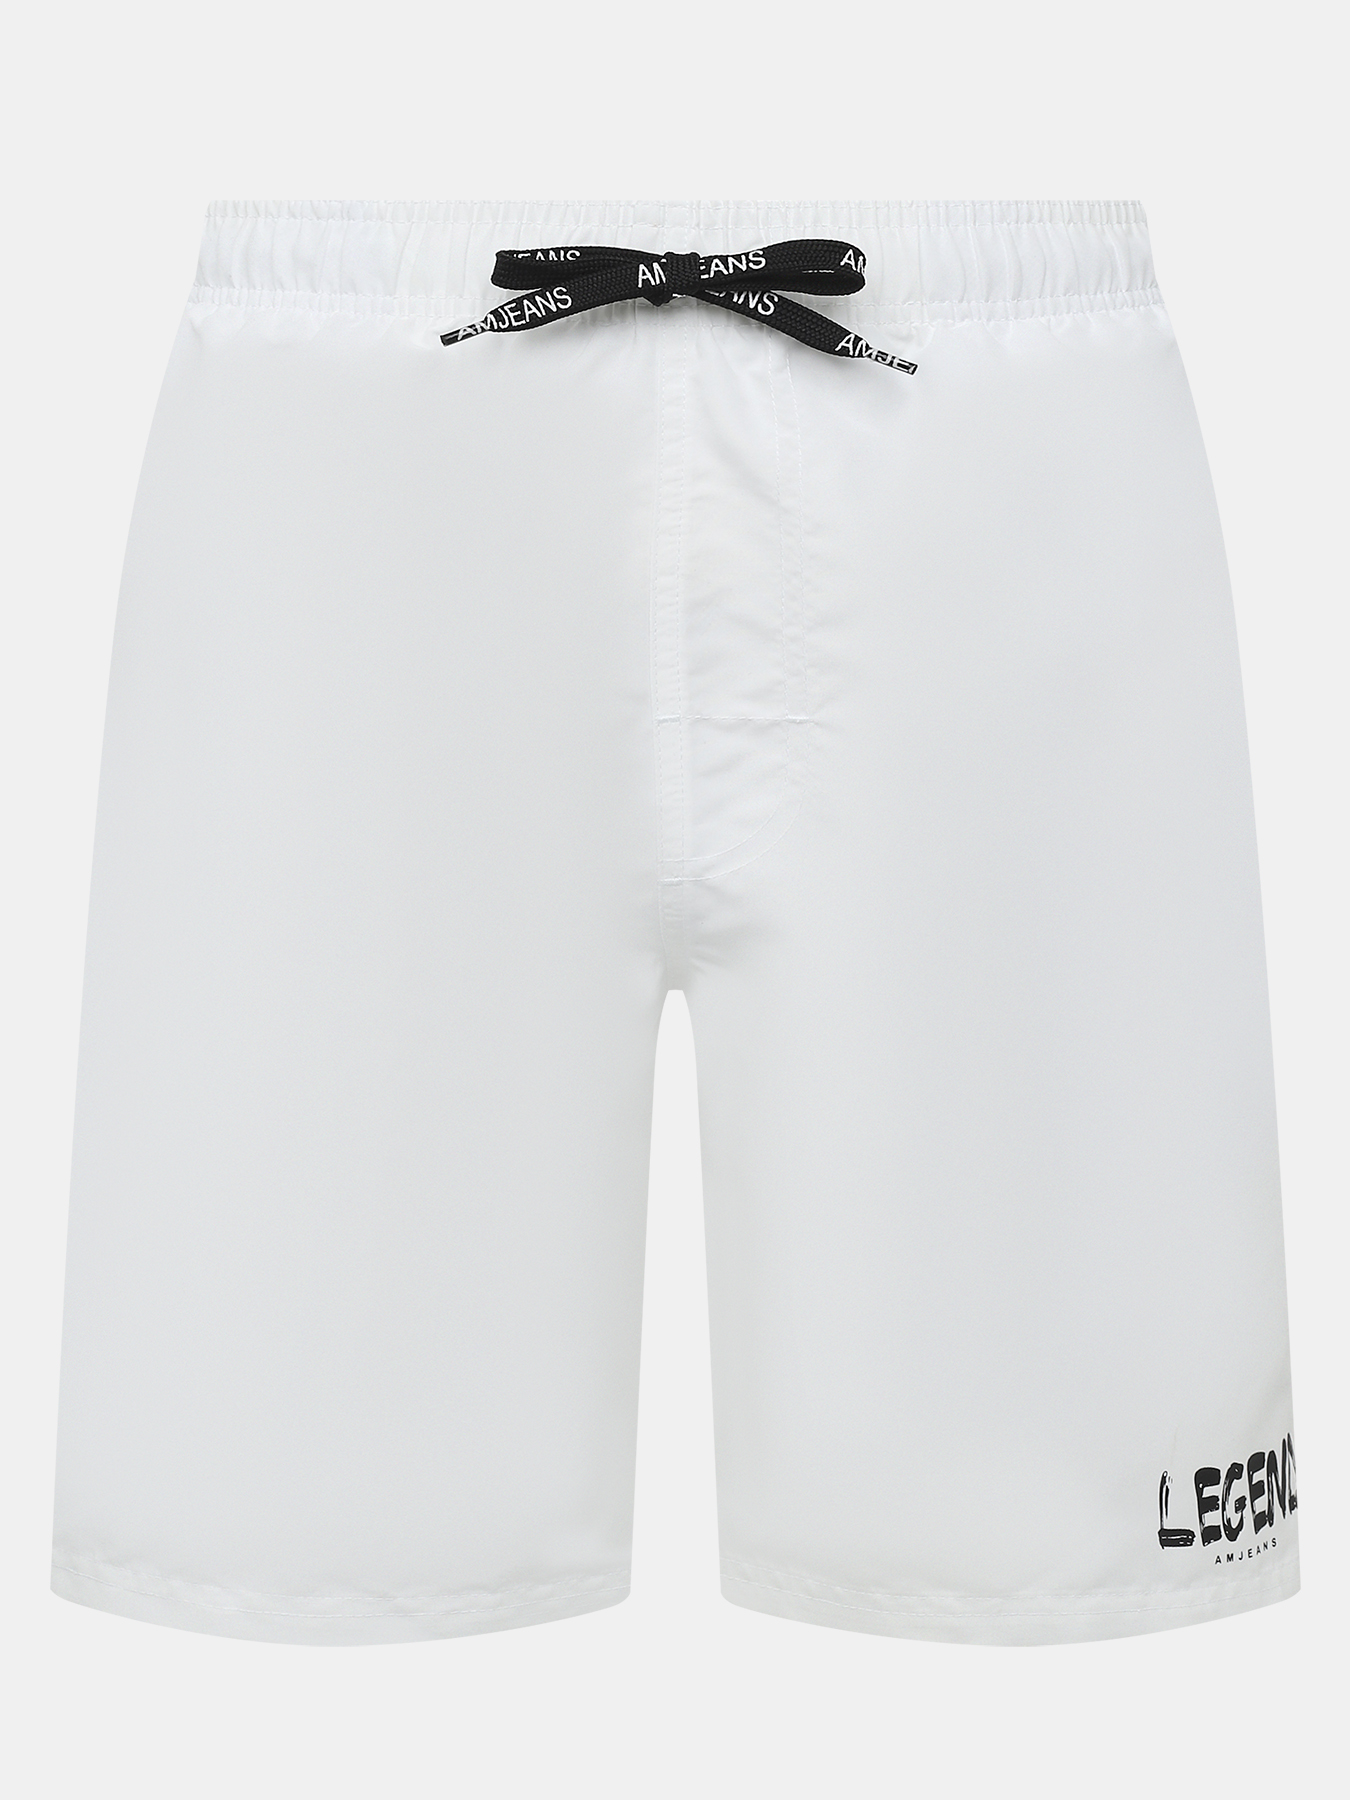 Шорты для плавания мужские Alessandro Manzoni Jeans 454098 белые 50 RU